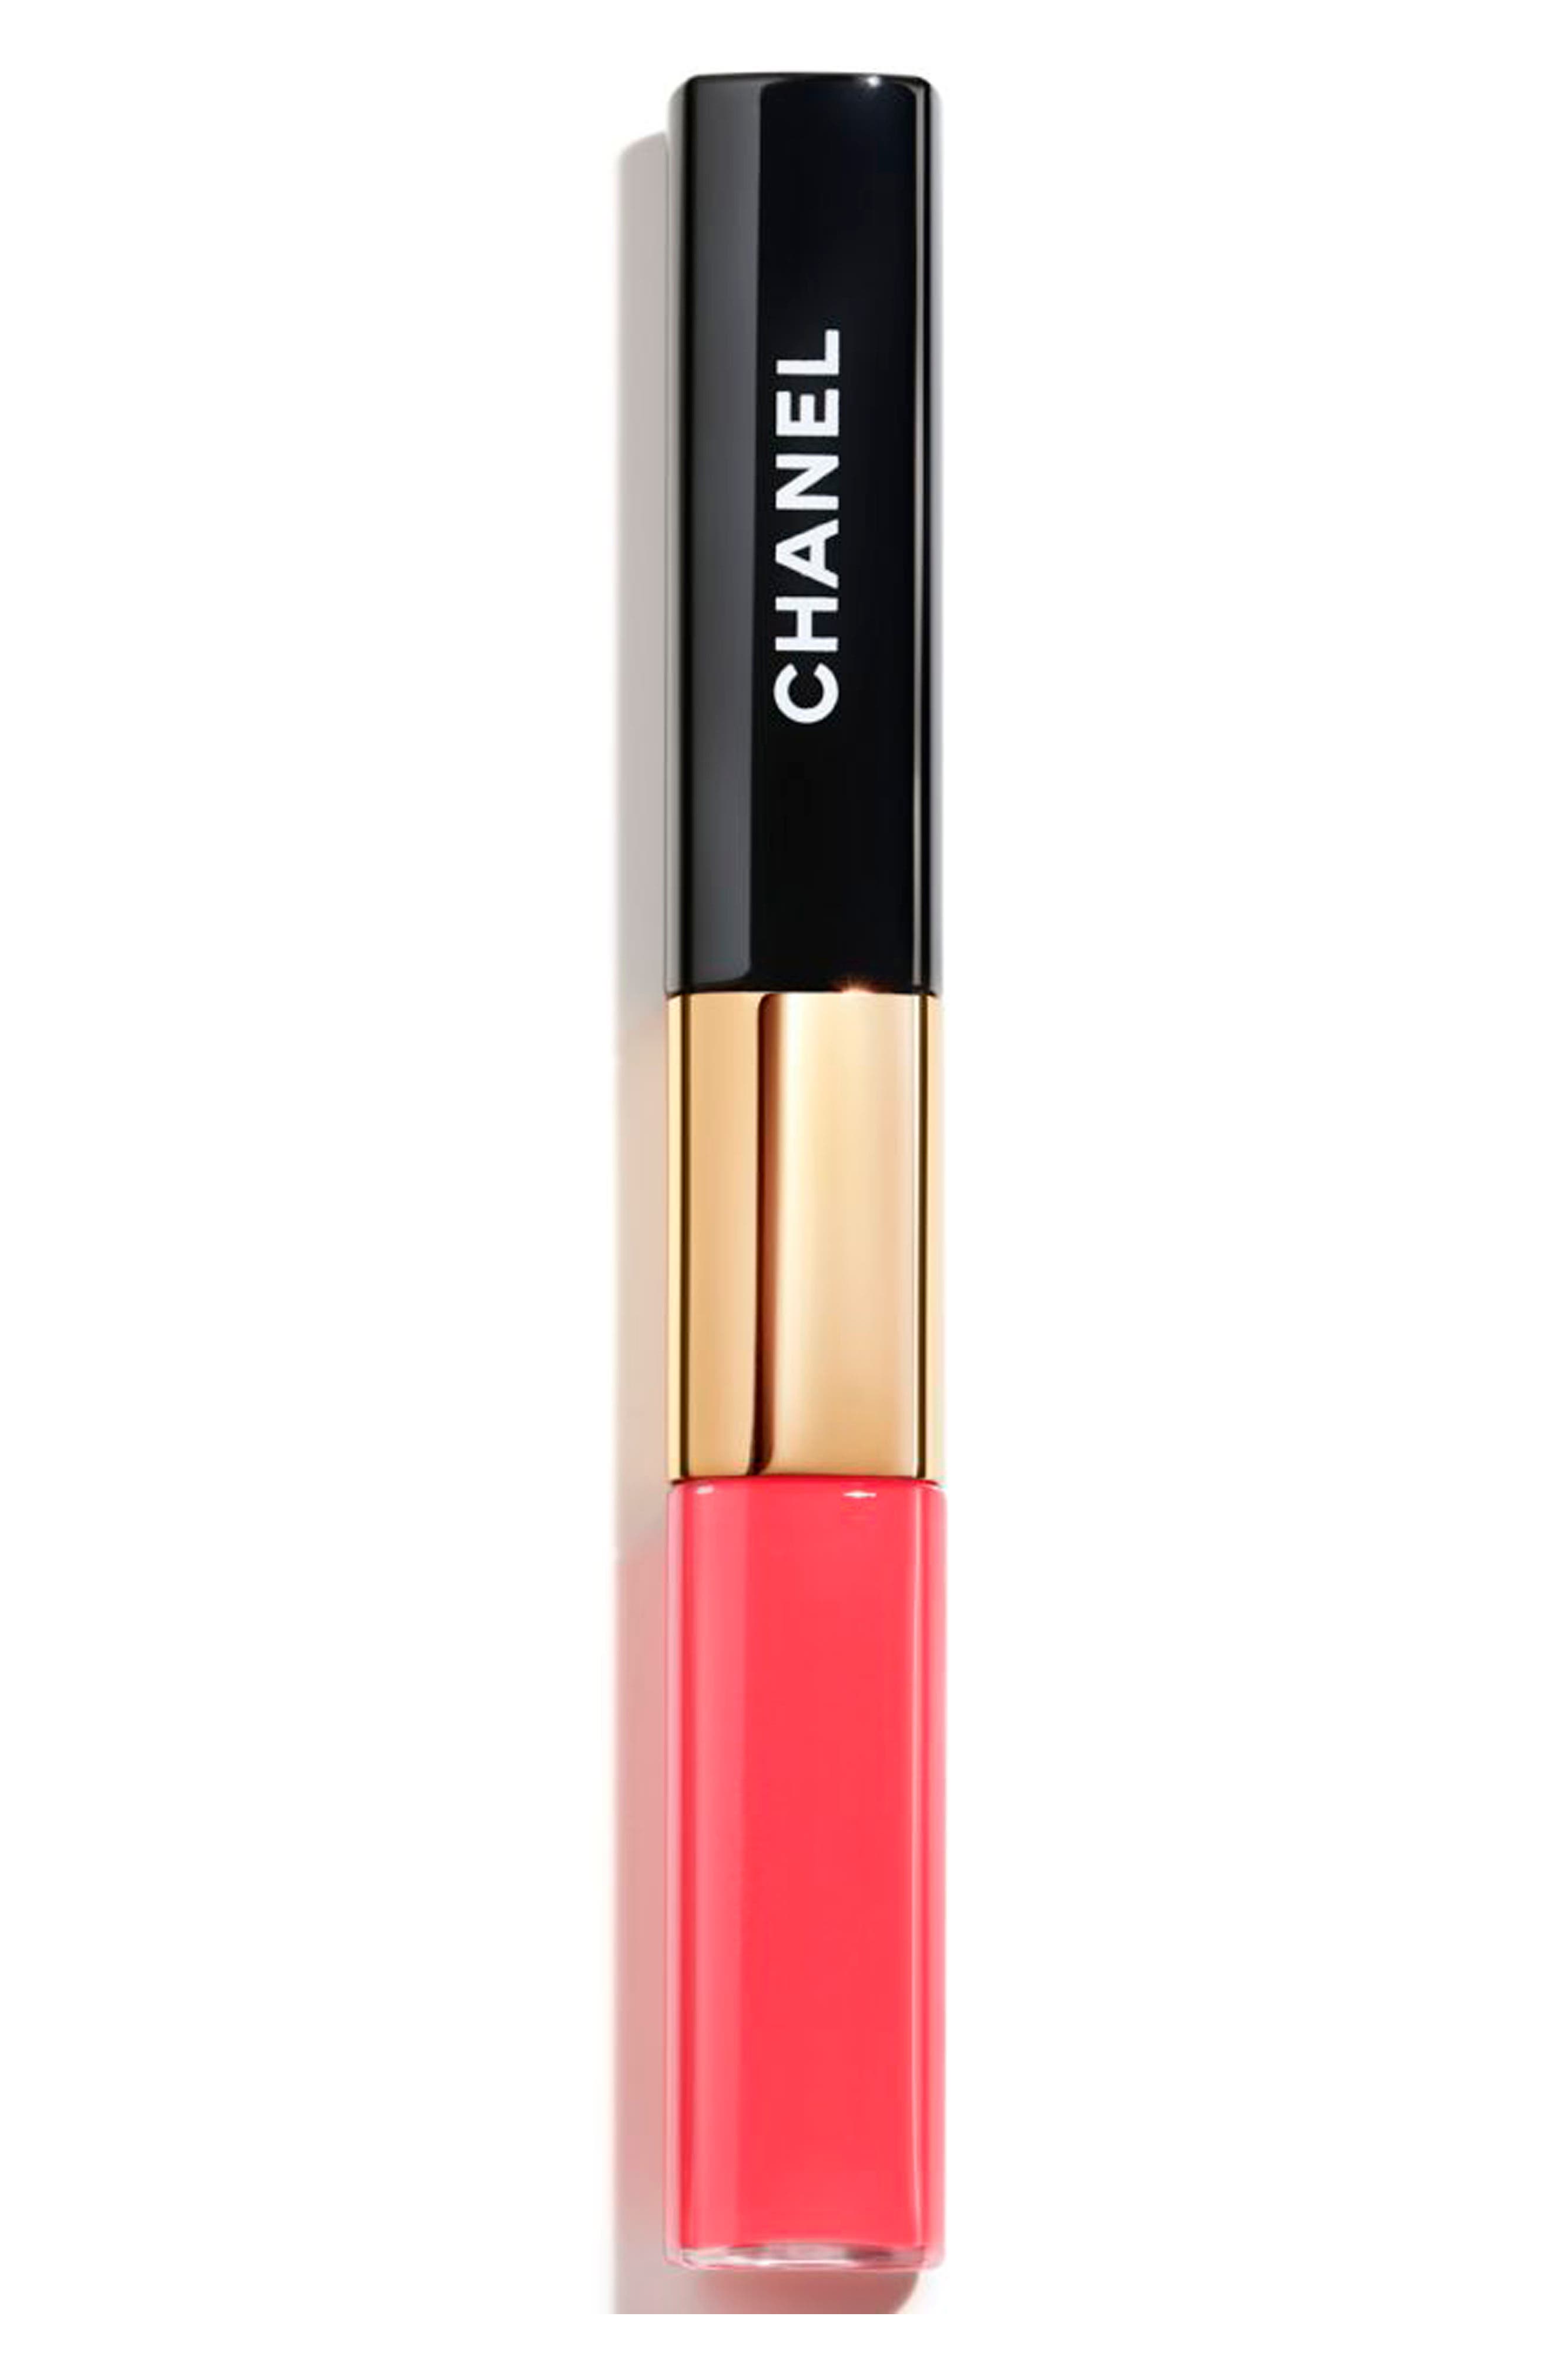 Chanel Makeup Color Chart